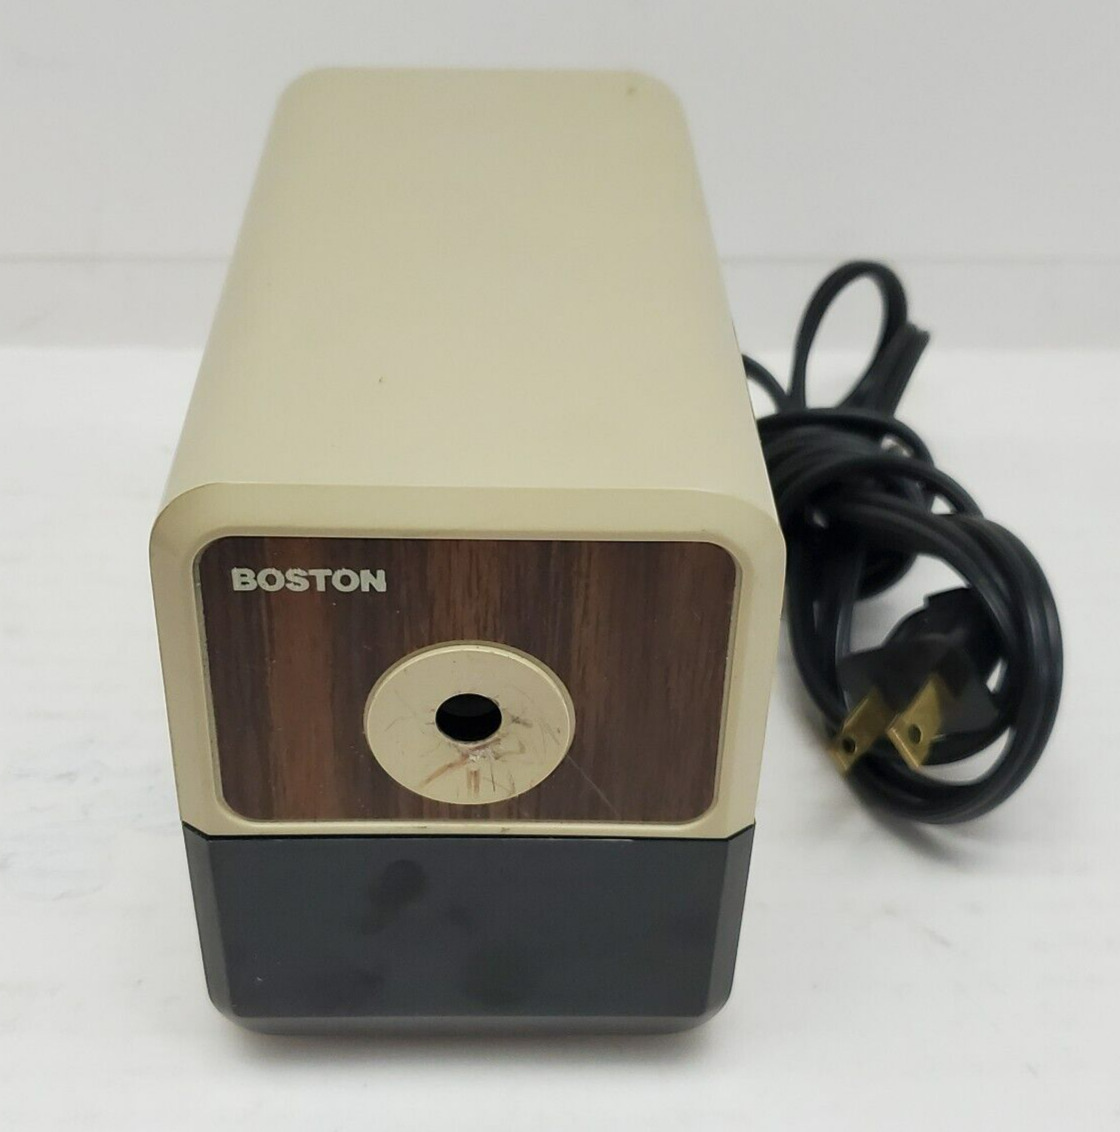 Boston Electric Pencil Sharpener Desktop Model 18 296a Usa Tested Works